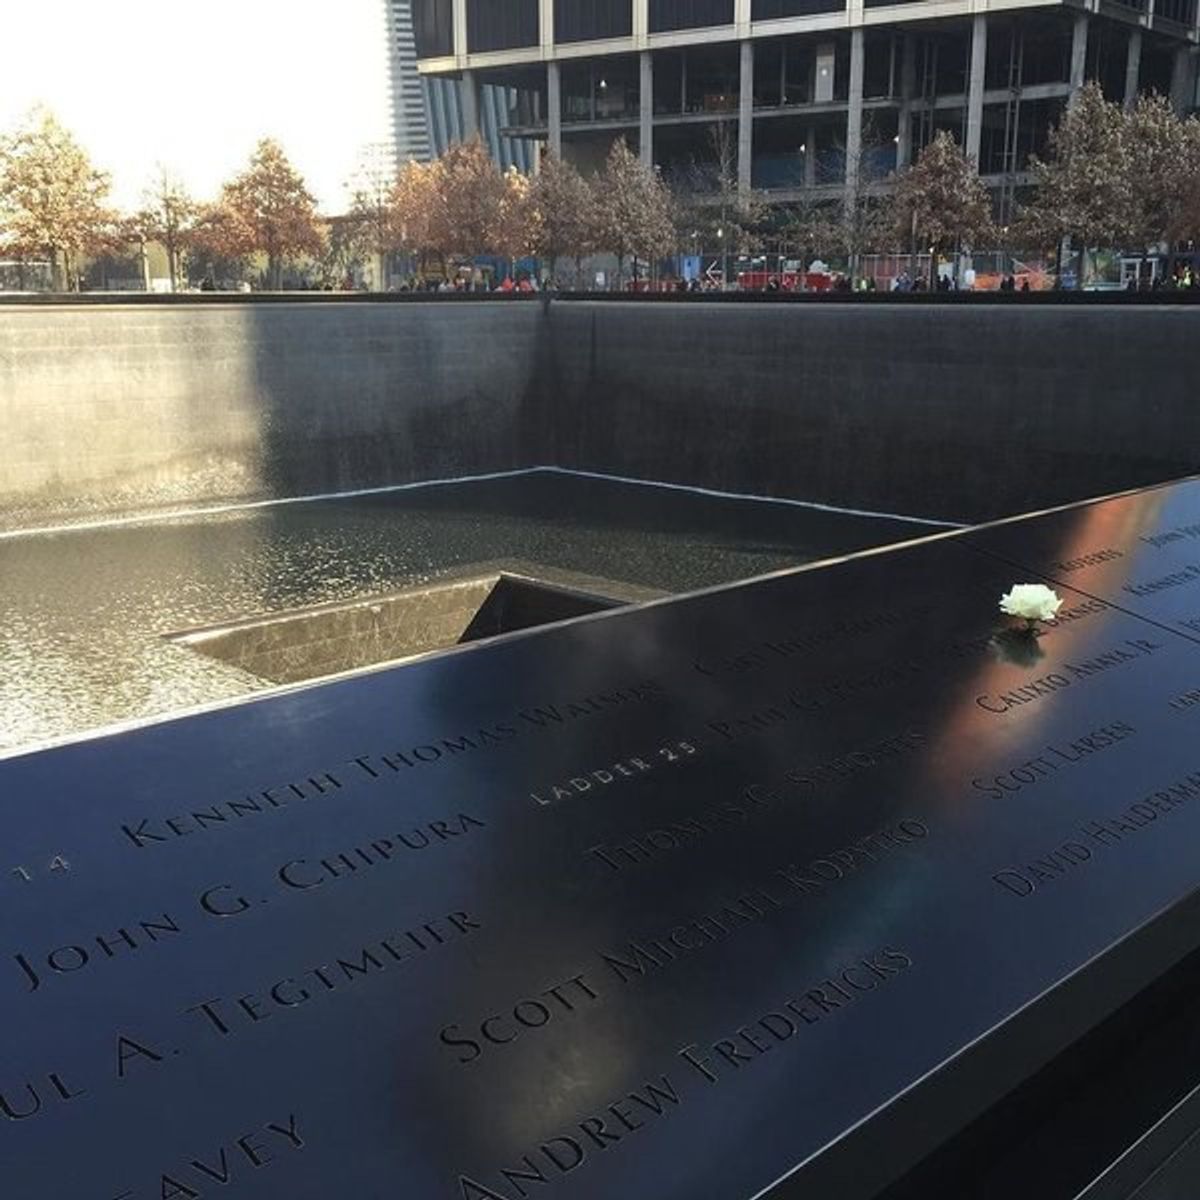 9/11: A Millennial Remembers